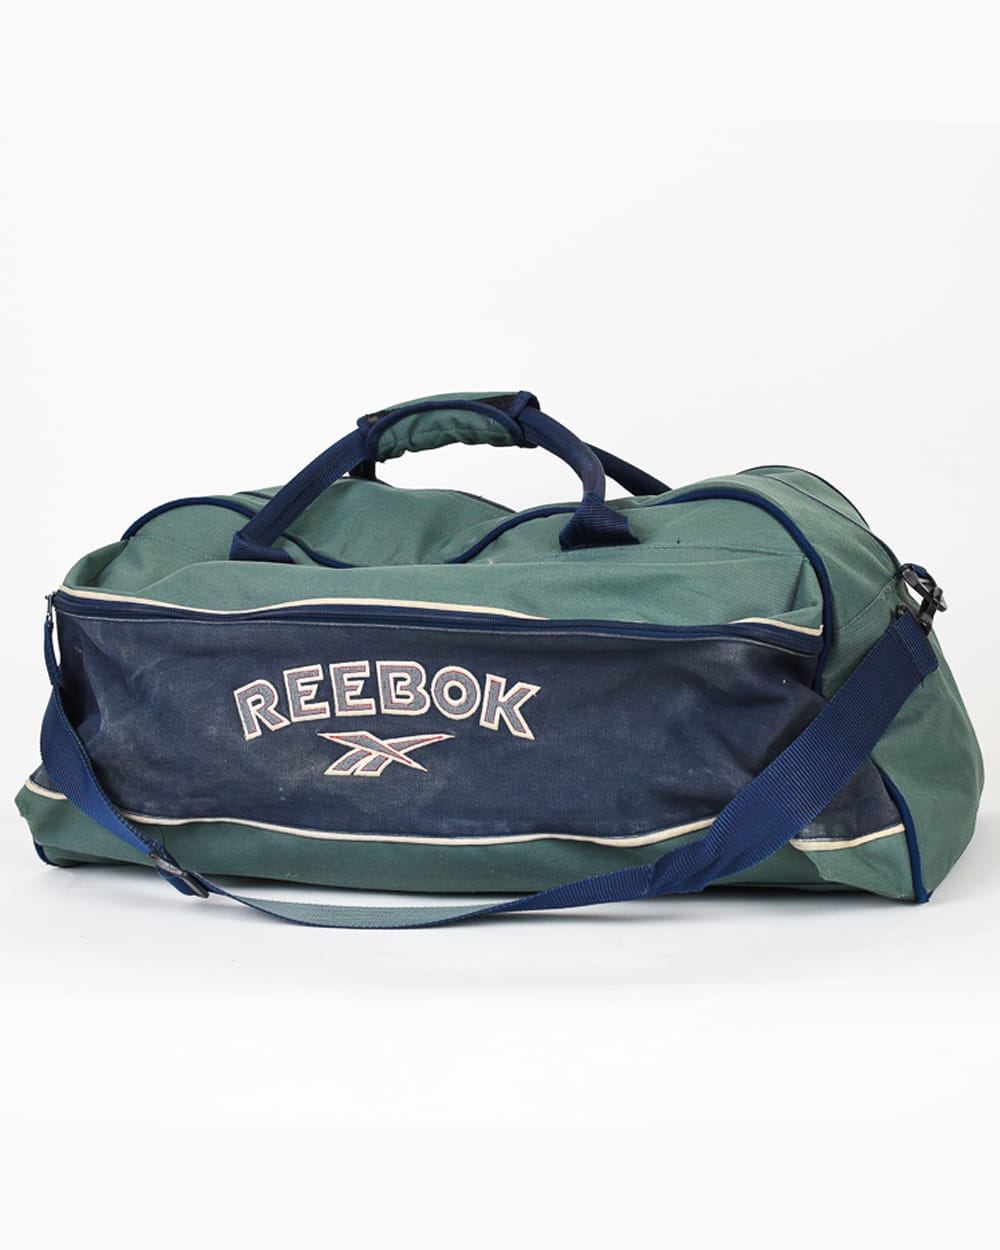  Reebok Duffle Bag